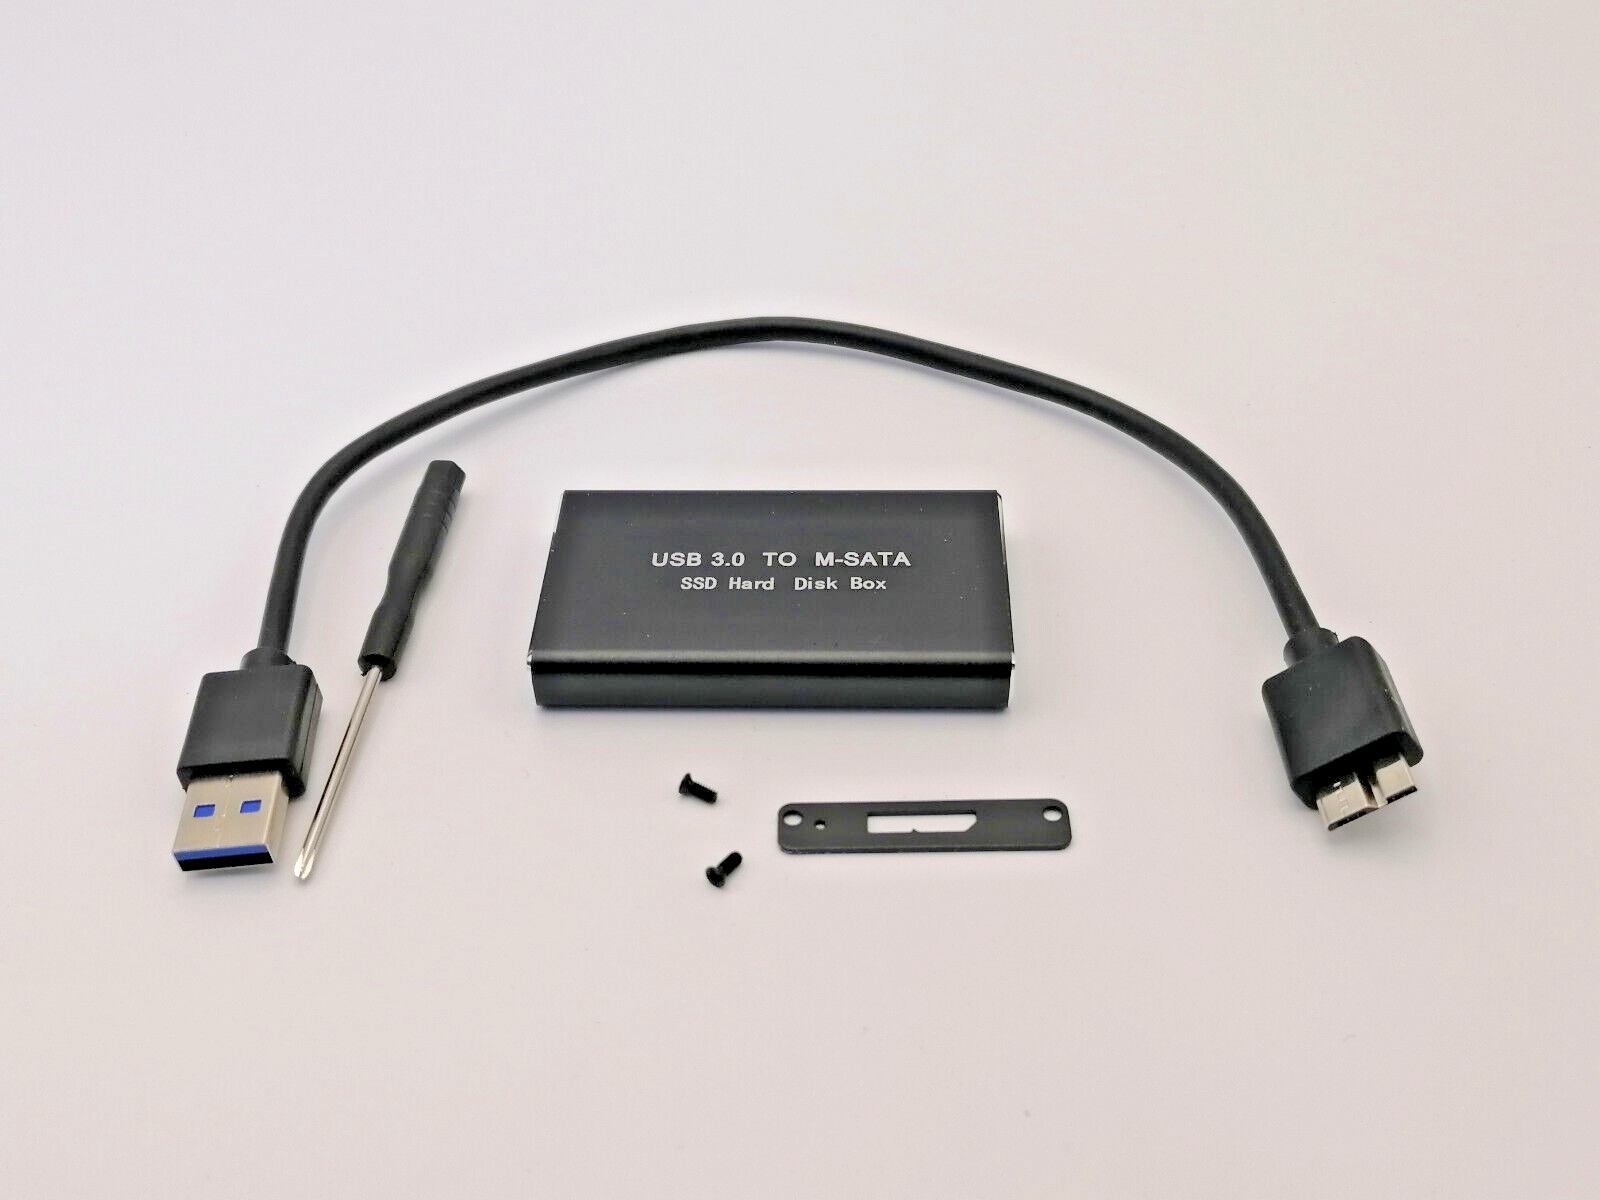 External mSATA SSD to USB 3.0 SuperSpeed Converter Adapter Enclosure Case